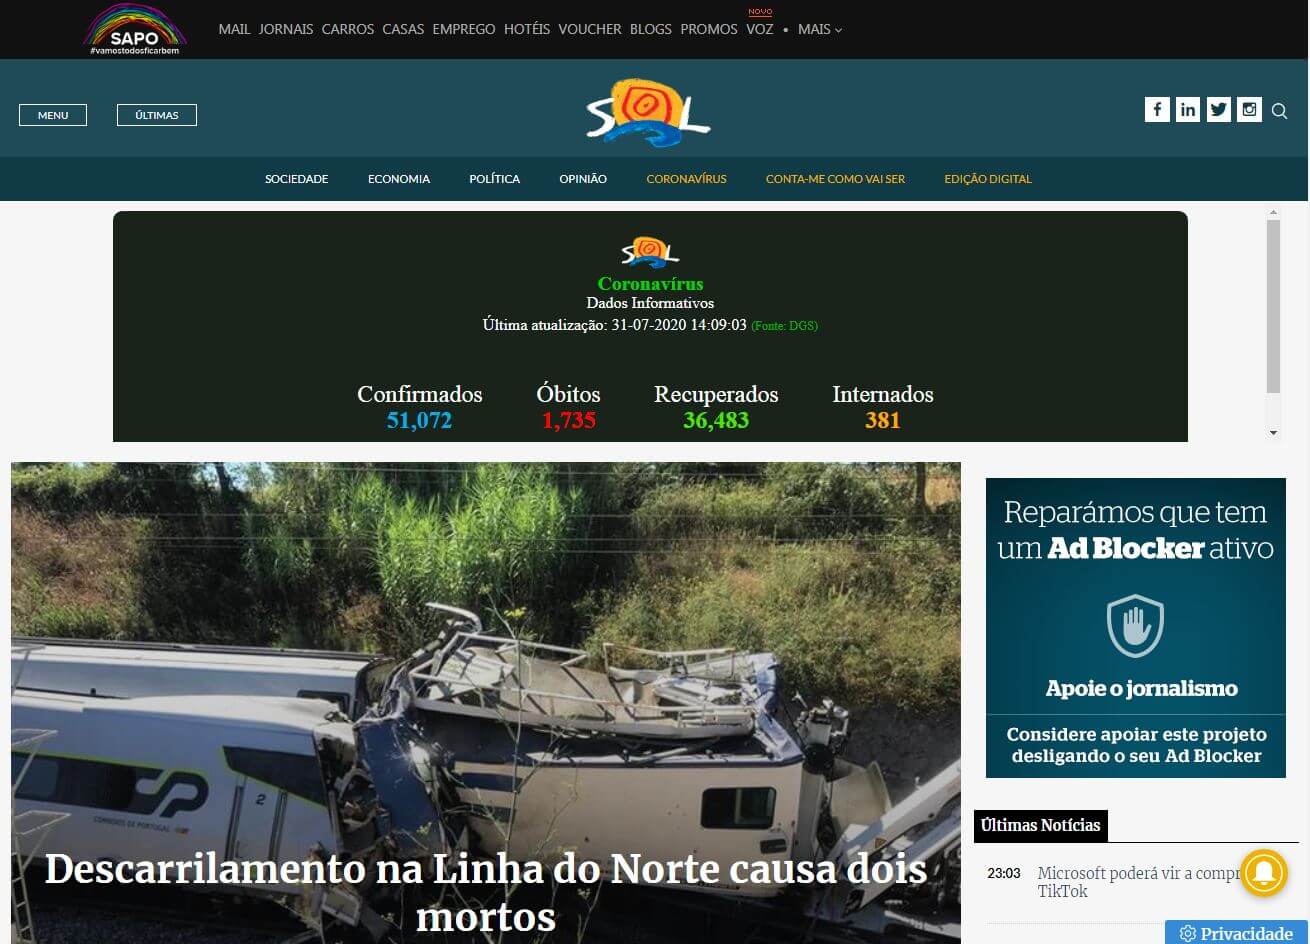 periodicos de portugal 02 sol website